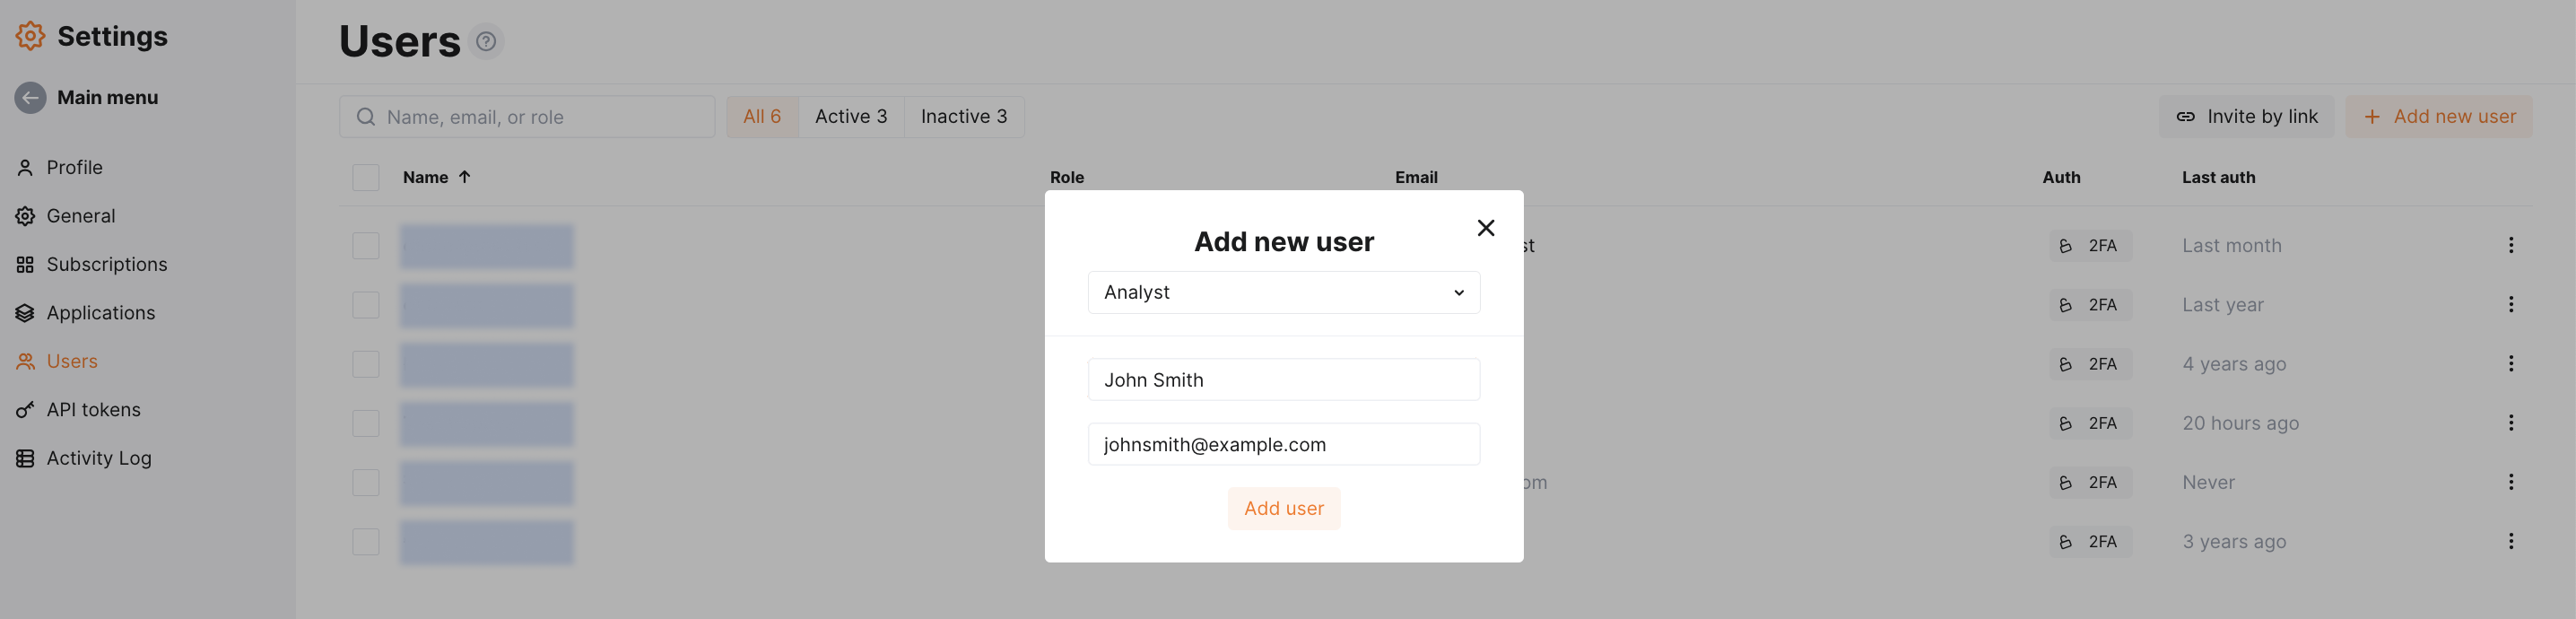 Adding user